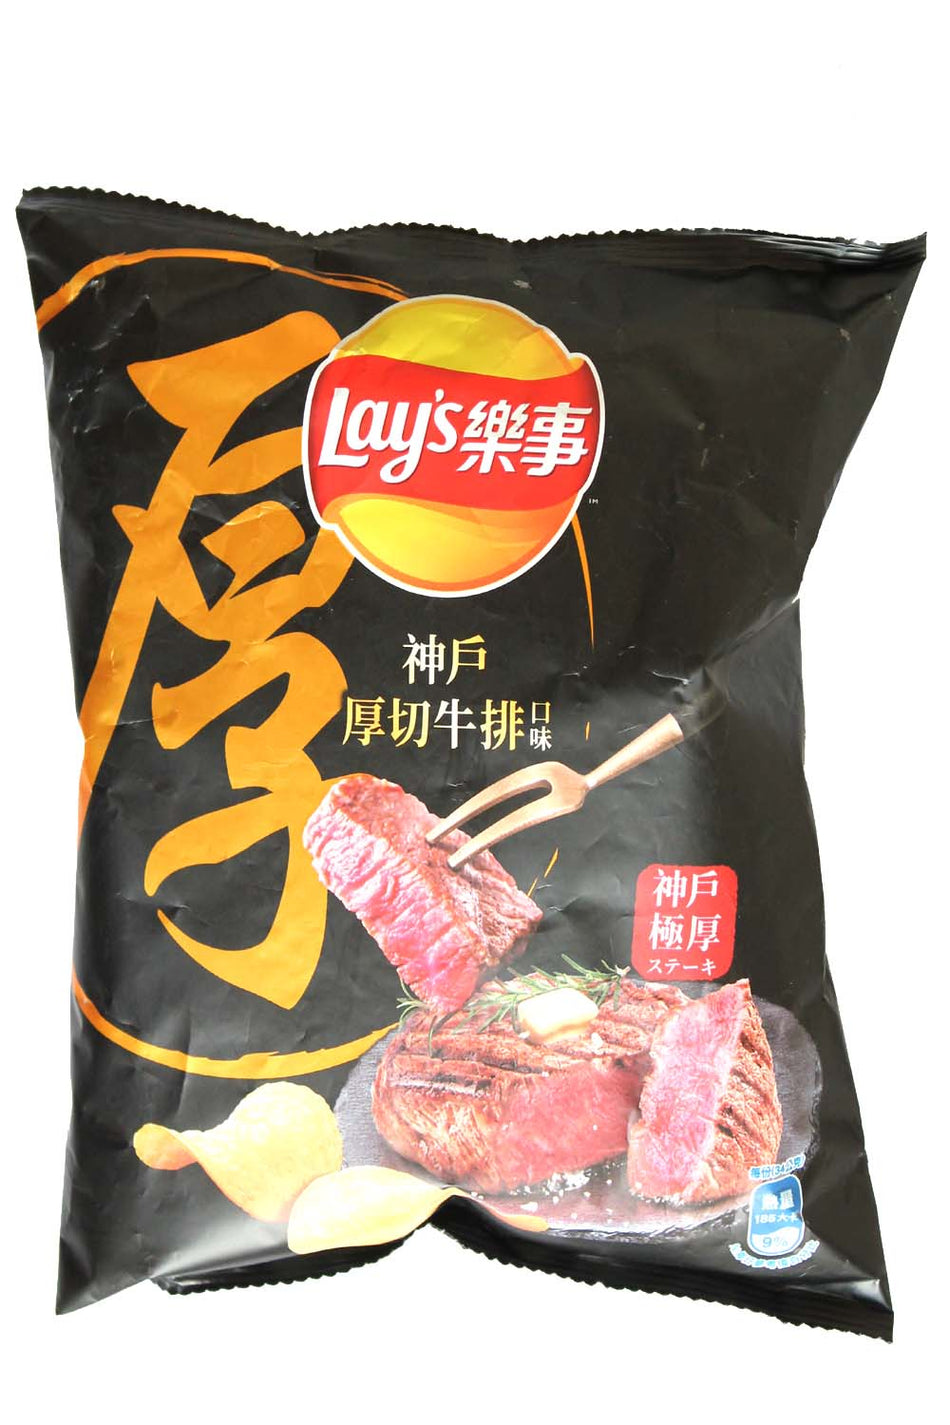 Lay's Artificial  Kobe Beef flavor chip